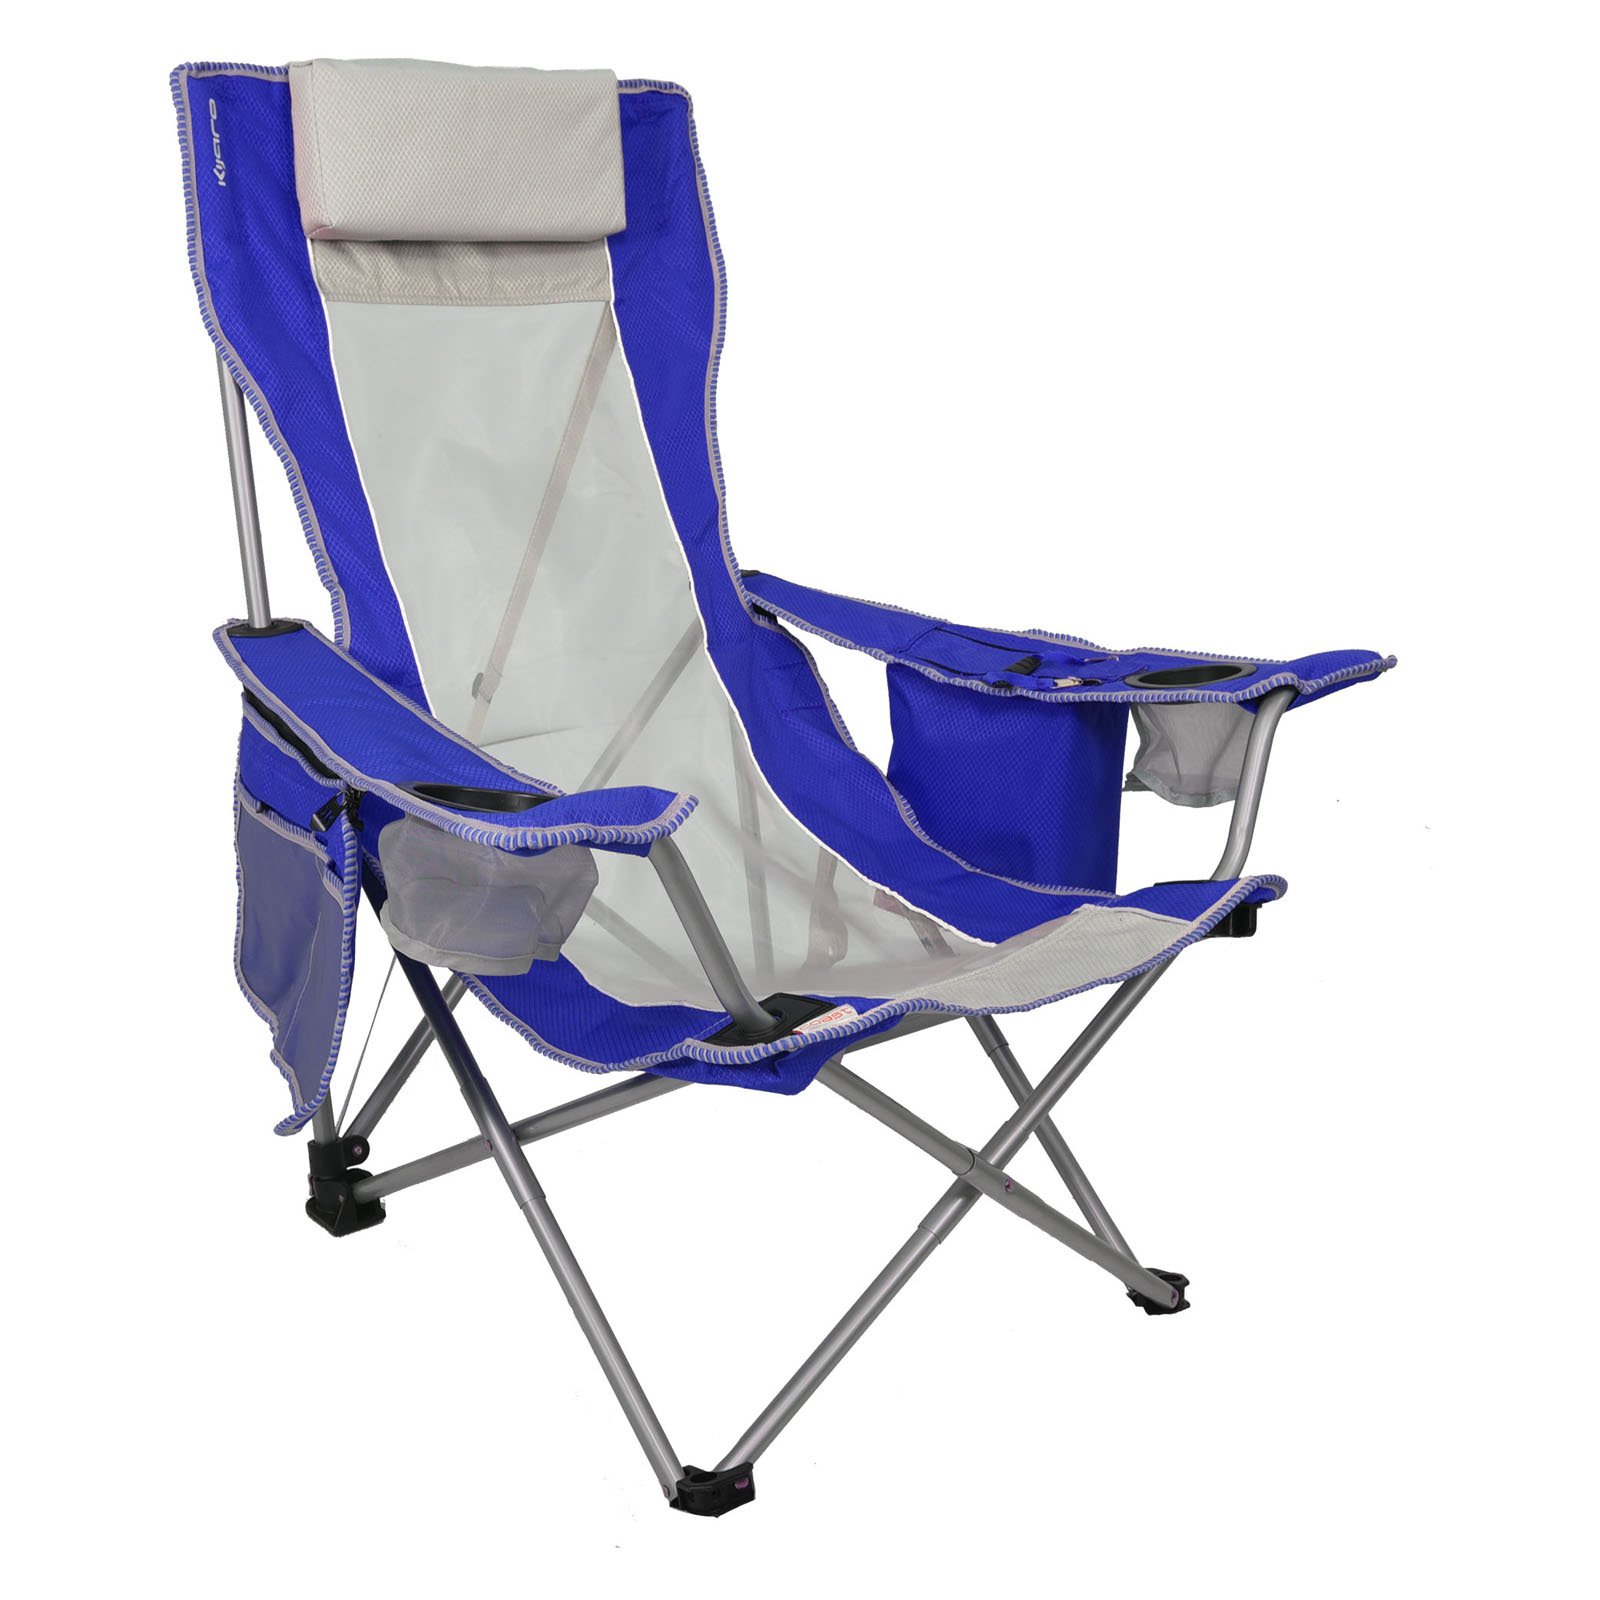 Kijaro Folding Polyester Beach Chair - Blue/Gray - image 1 of 8